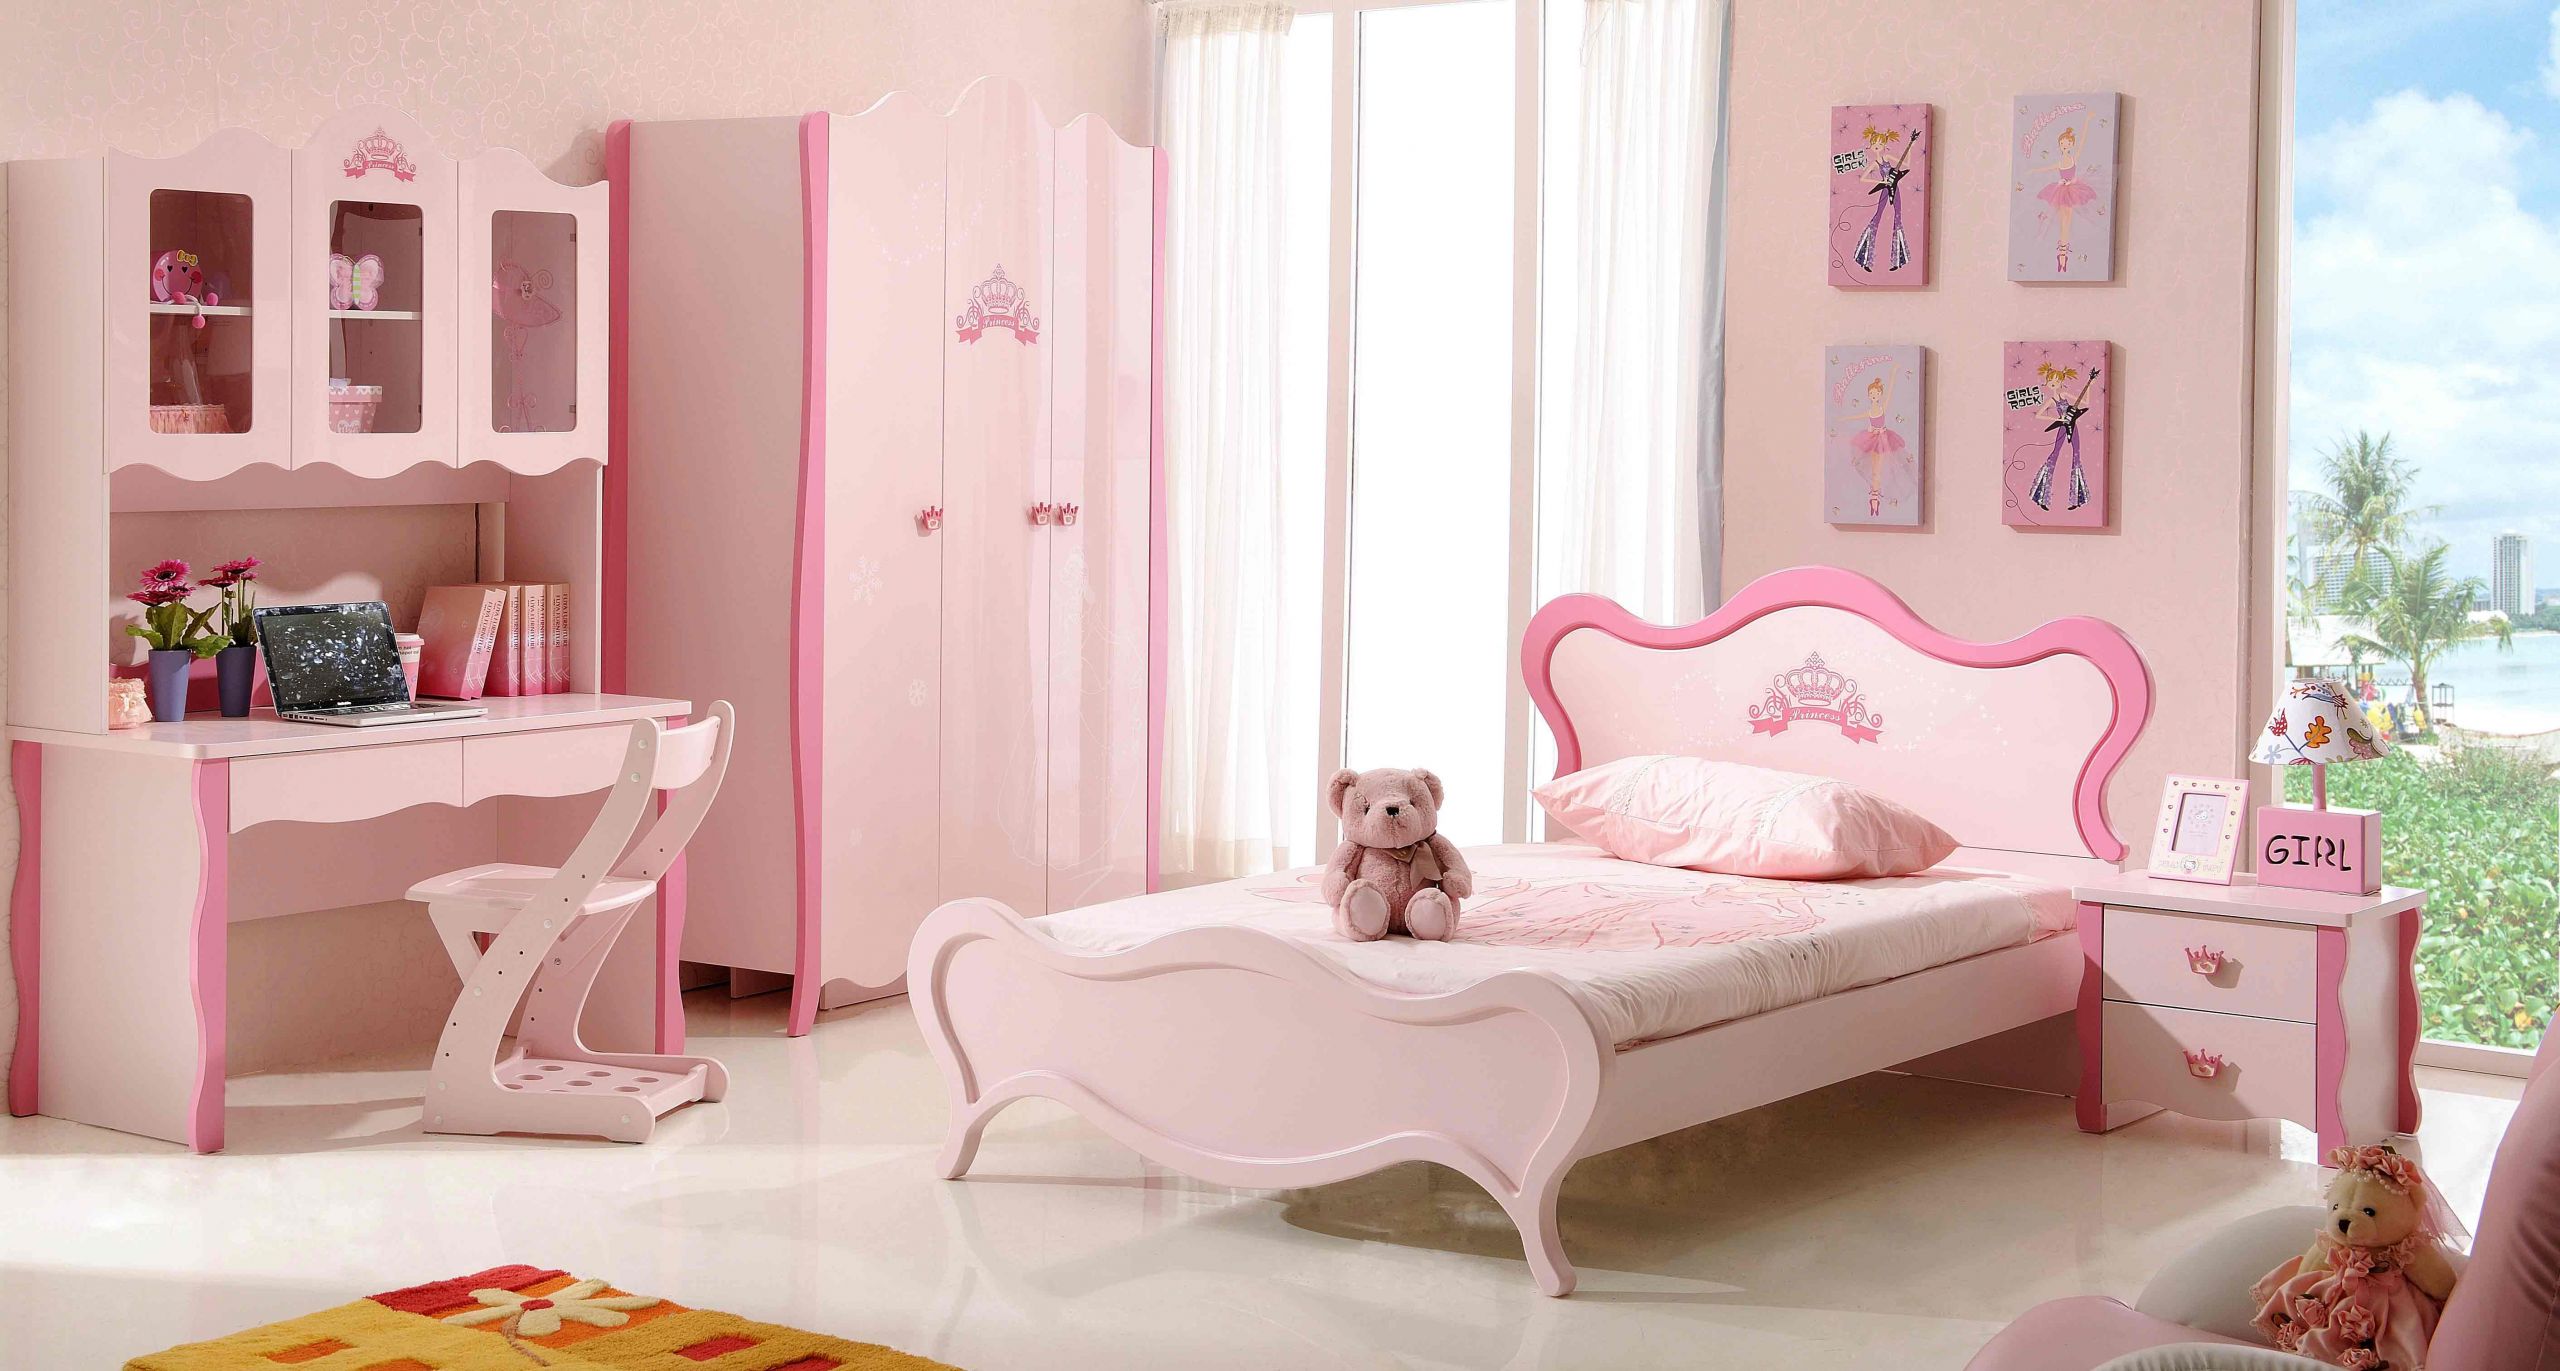 Teenage Girl Bedroom Furniture
 Bedroom Sweet Bedroom Sets Teenage Decorating Ideas